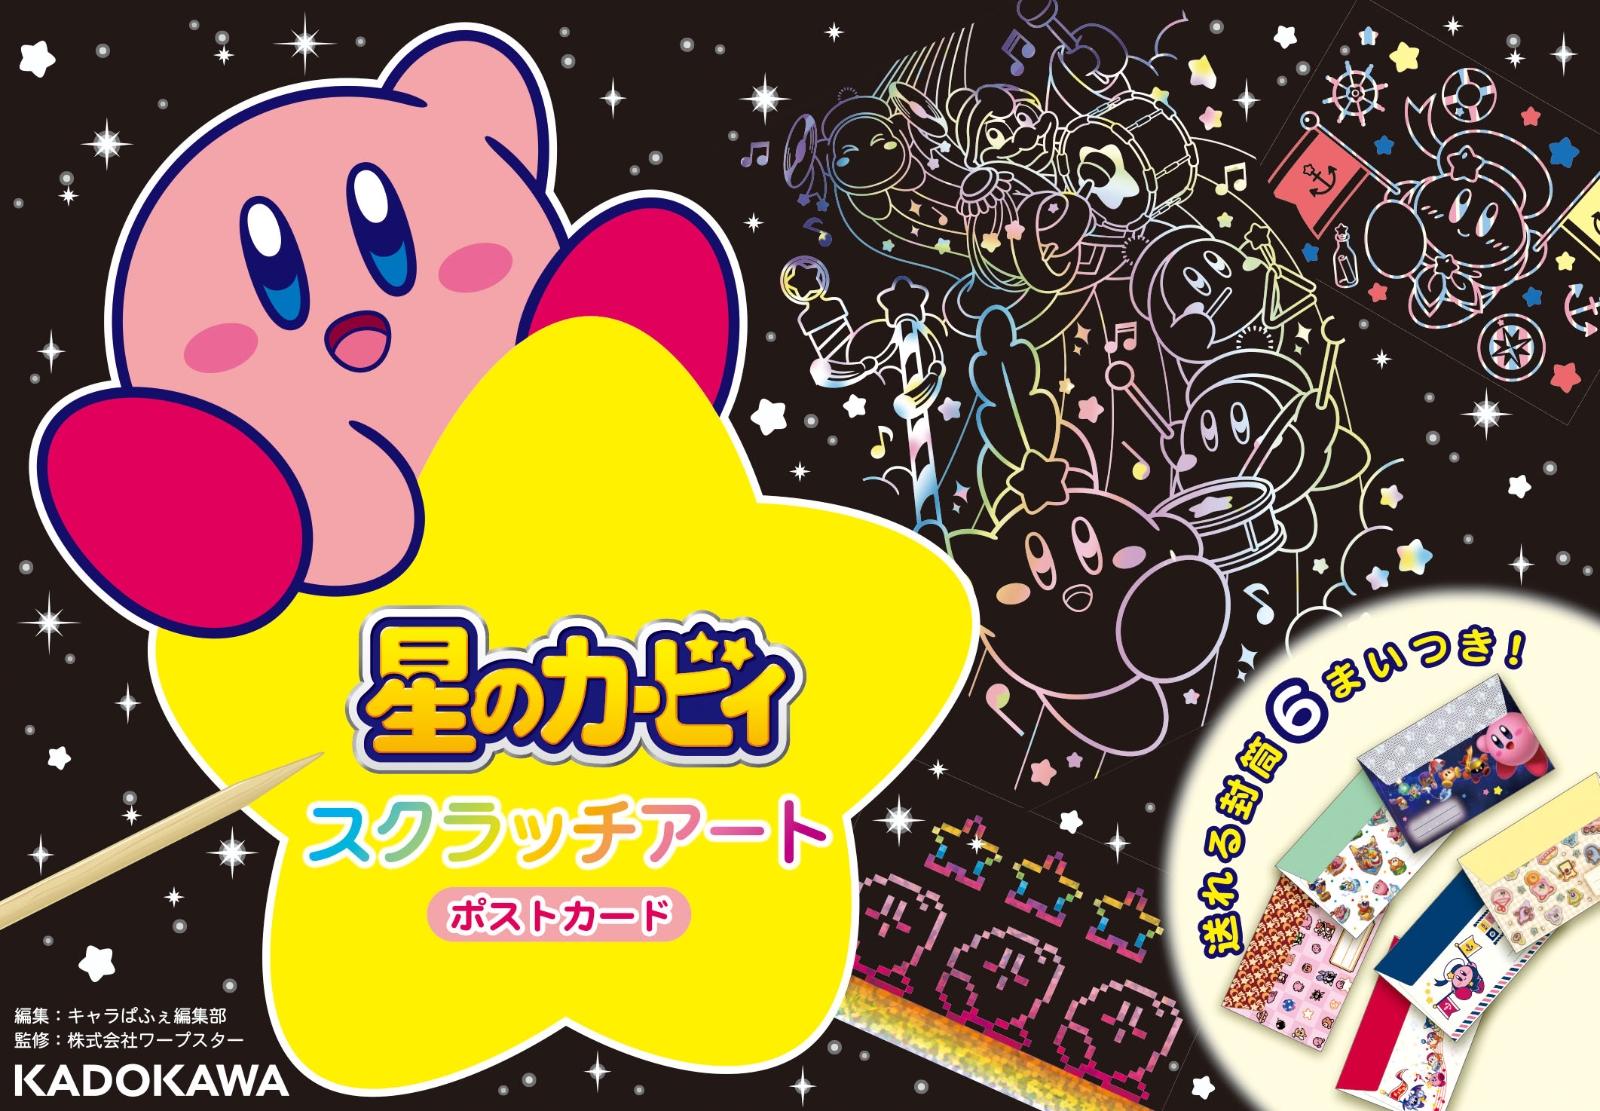 Kadokawaから 星のカービィ スクラッチアート ポストカード が19年3月日に発売決定